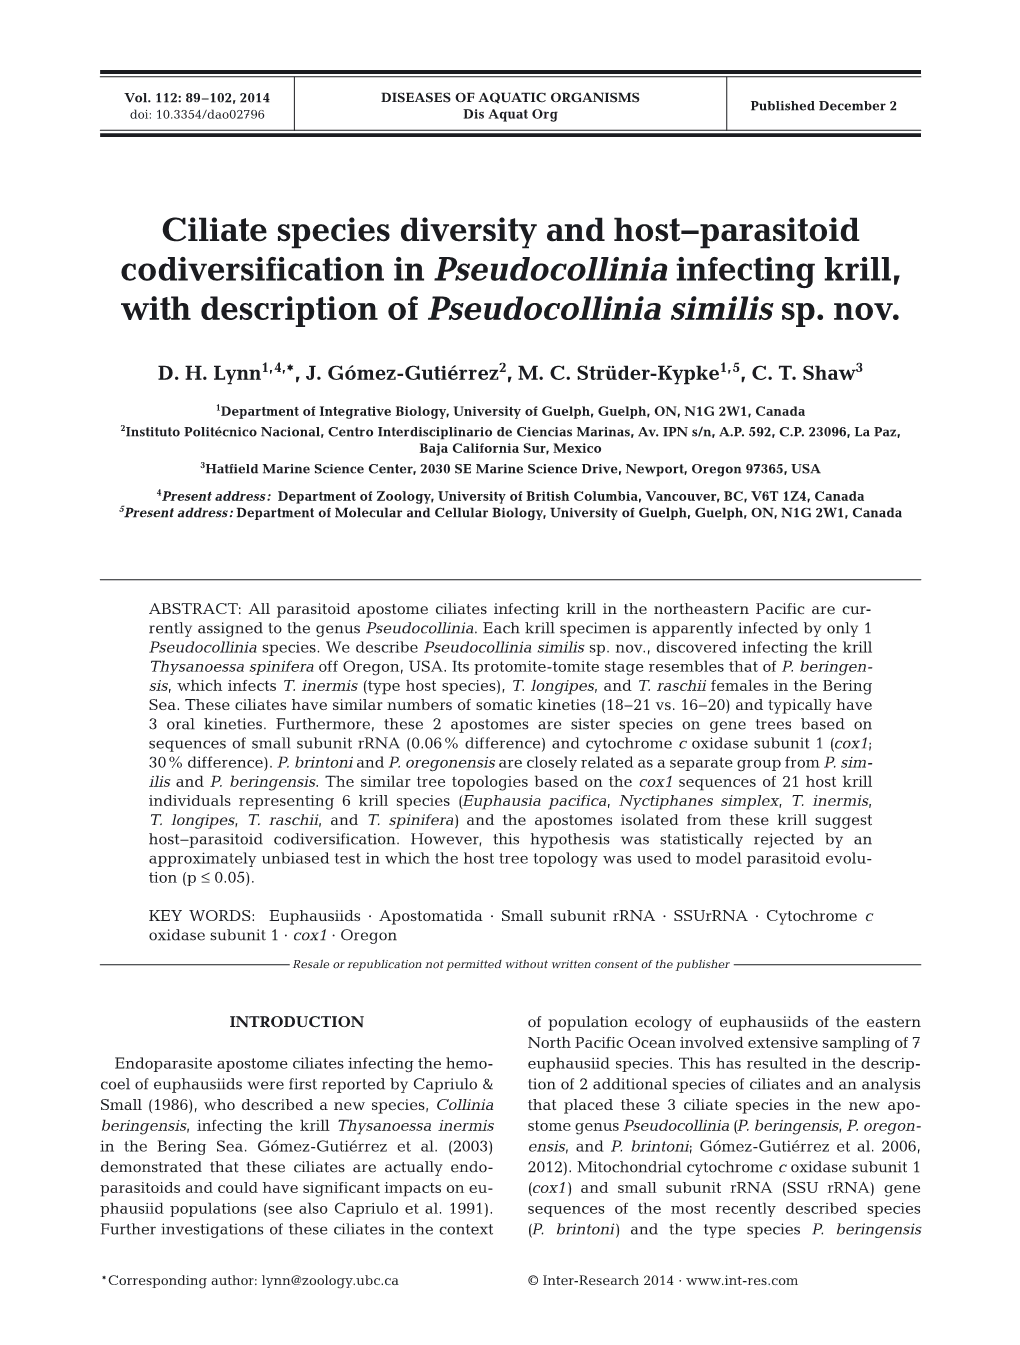 Ciliate Species Diversity and Host-Parasitoid Codiversification in Pseudocollinia Infecting Krill, with Description of Pseudocollinia Similis Sp. Nov